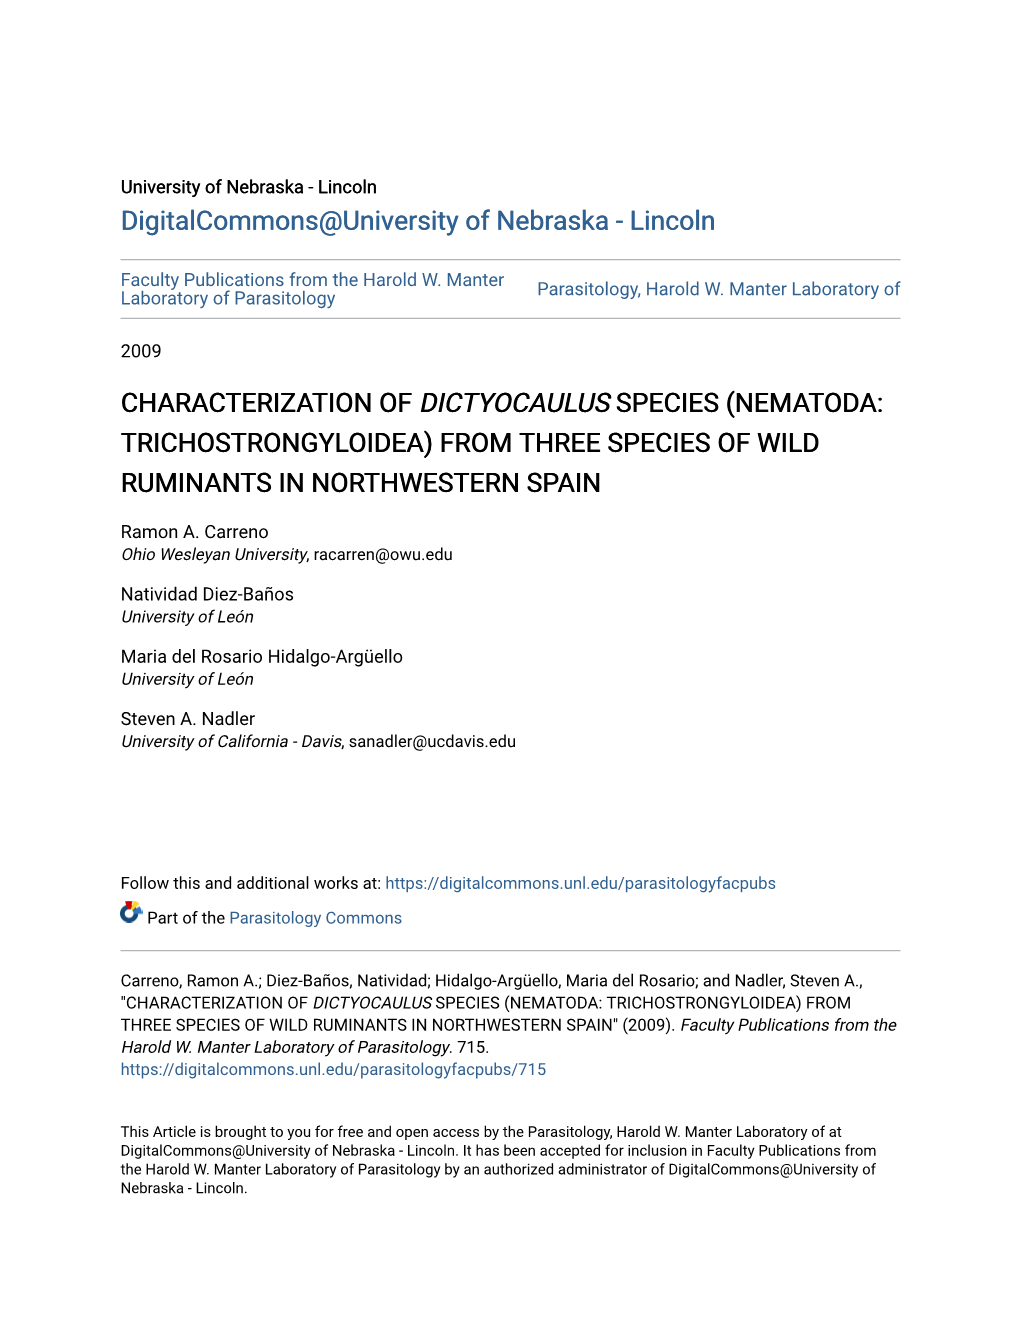 Characterization of Dictyocaulus Species (Nematoda: Trichostrongyloidea) from Three Species of Wild Ruminants in Northwestern Spain